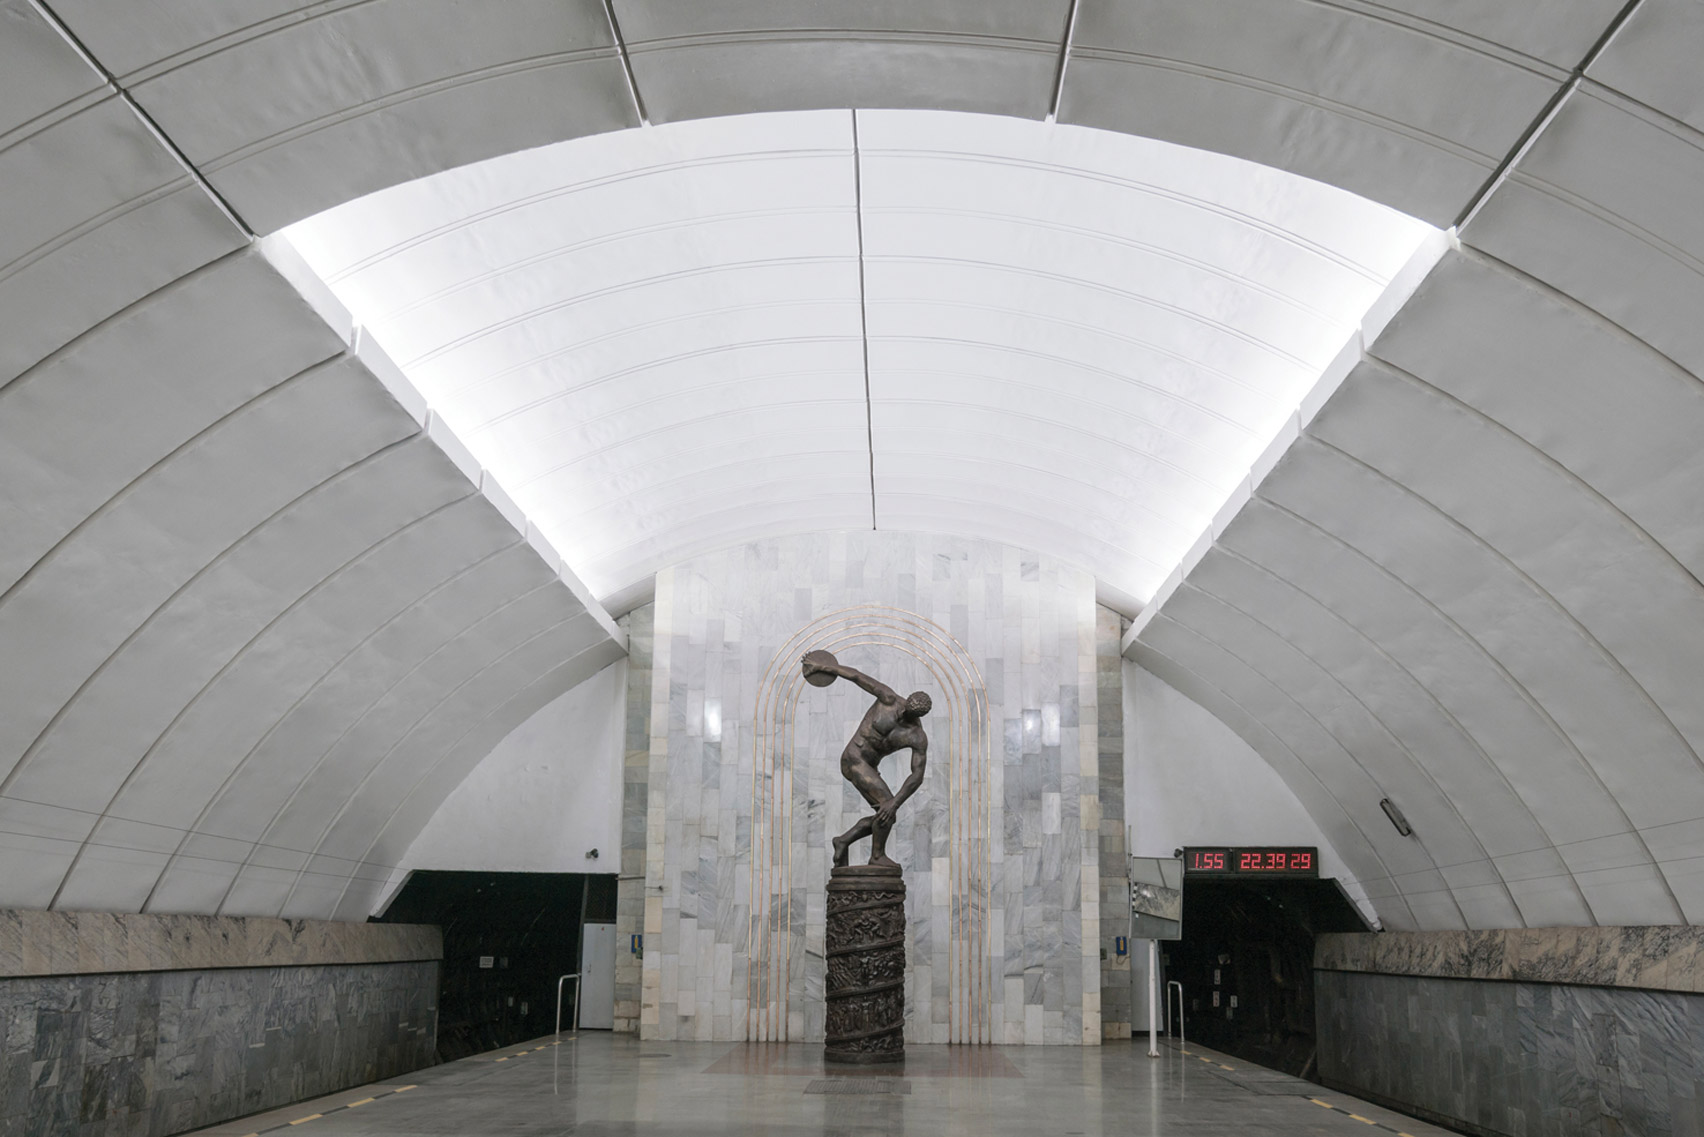 Soviet Metro Stations Christopher Herwig USSR